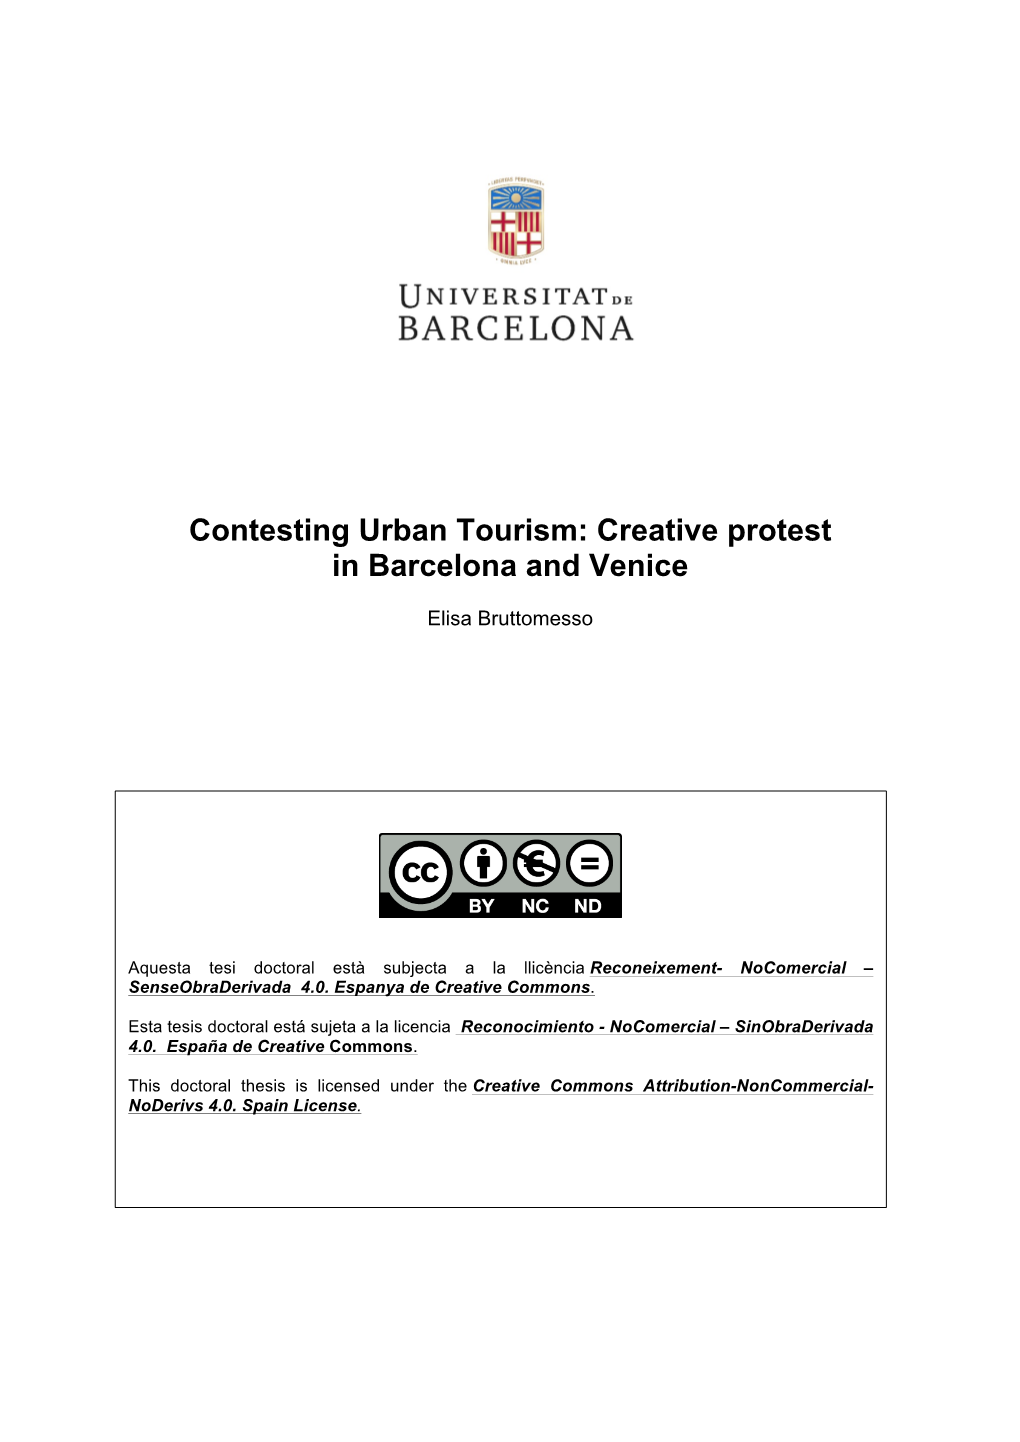 Contesting Urban Tourism: Creative Protest in Barcelona and Venice